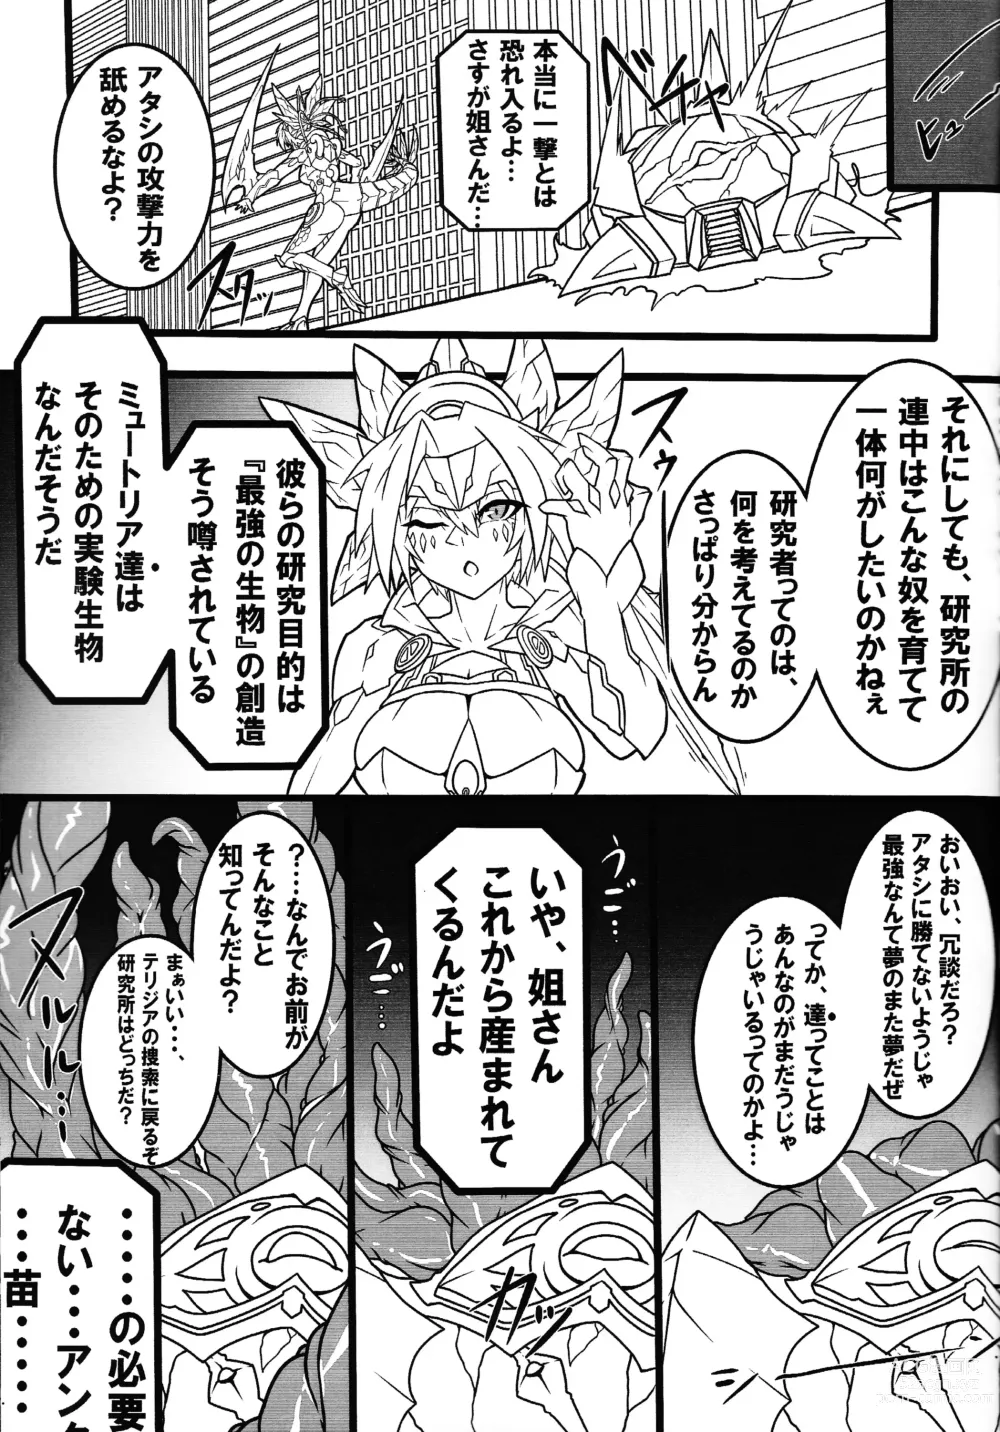 Page 8 of doujinshi Kenryu Reader